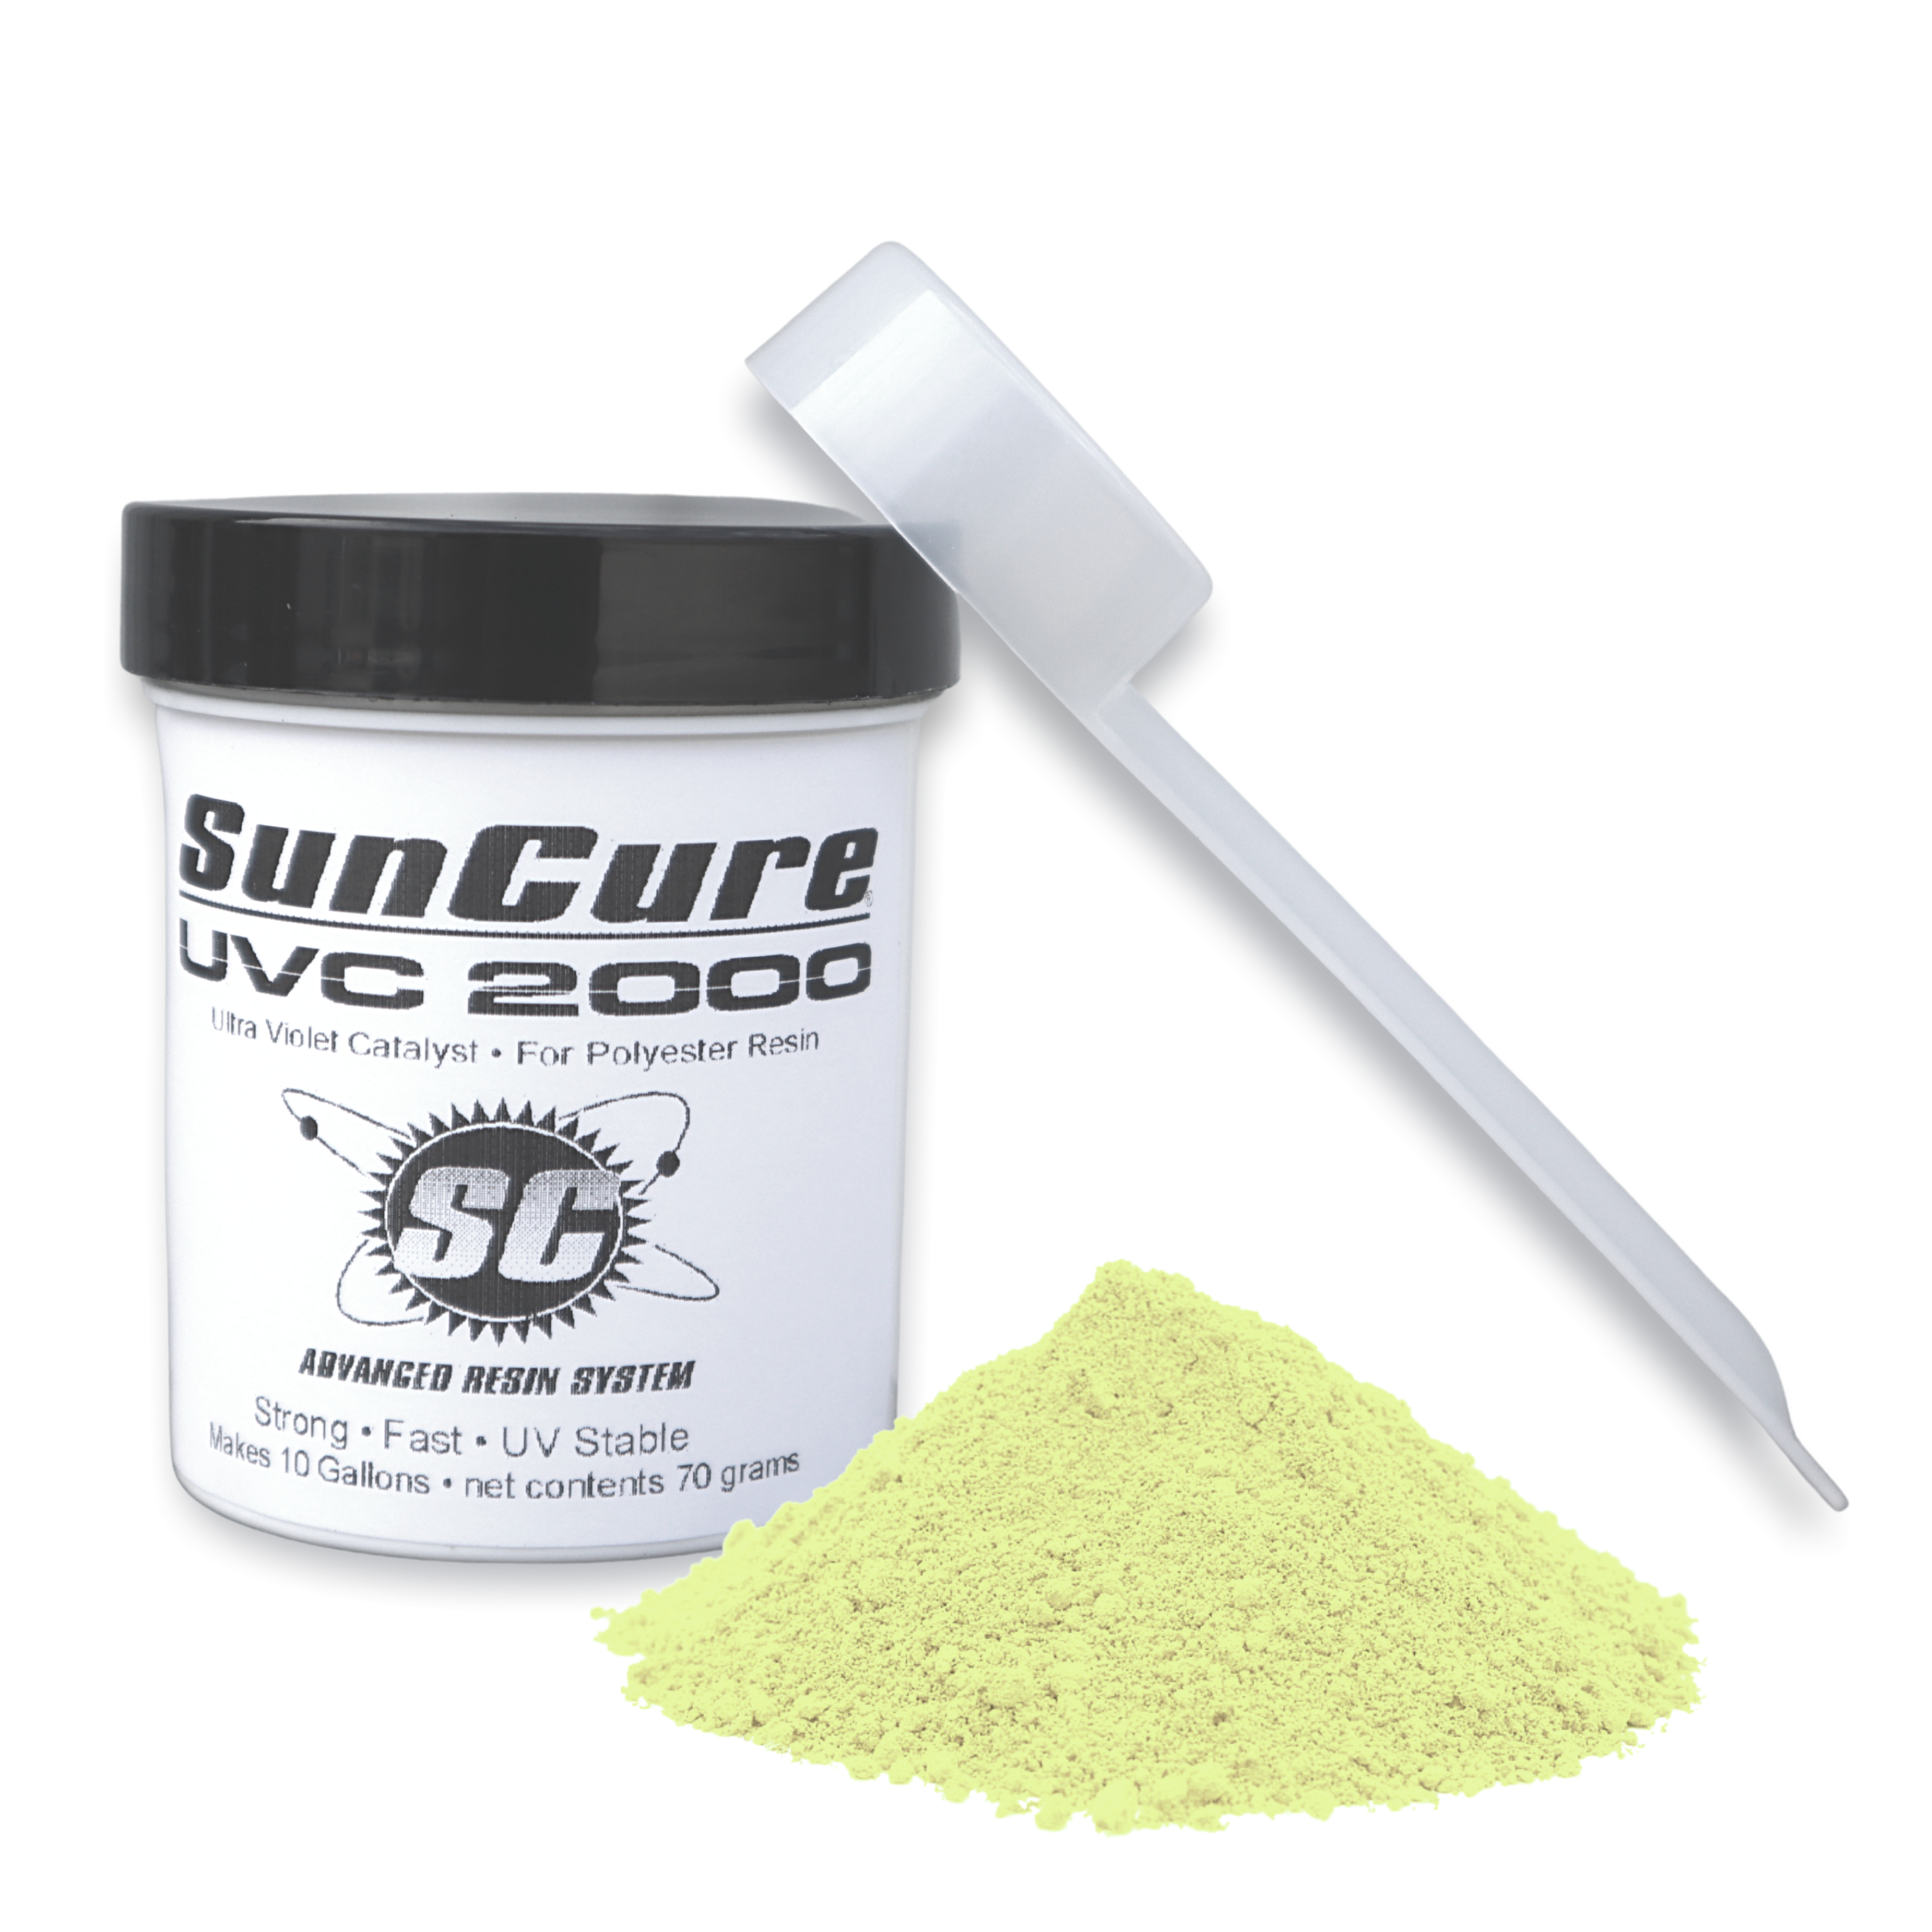 SunCure UV Epoxy Resin – Ding All & SunCure